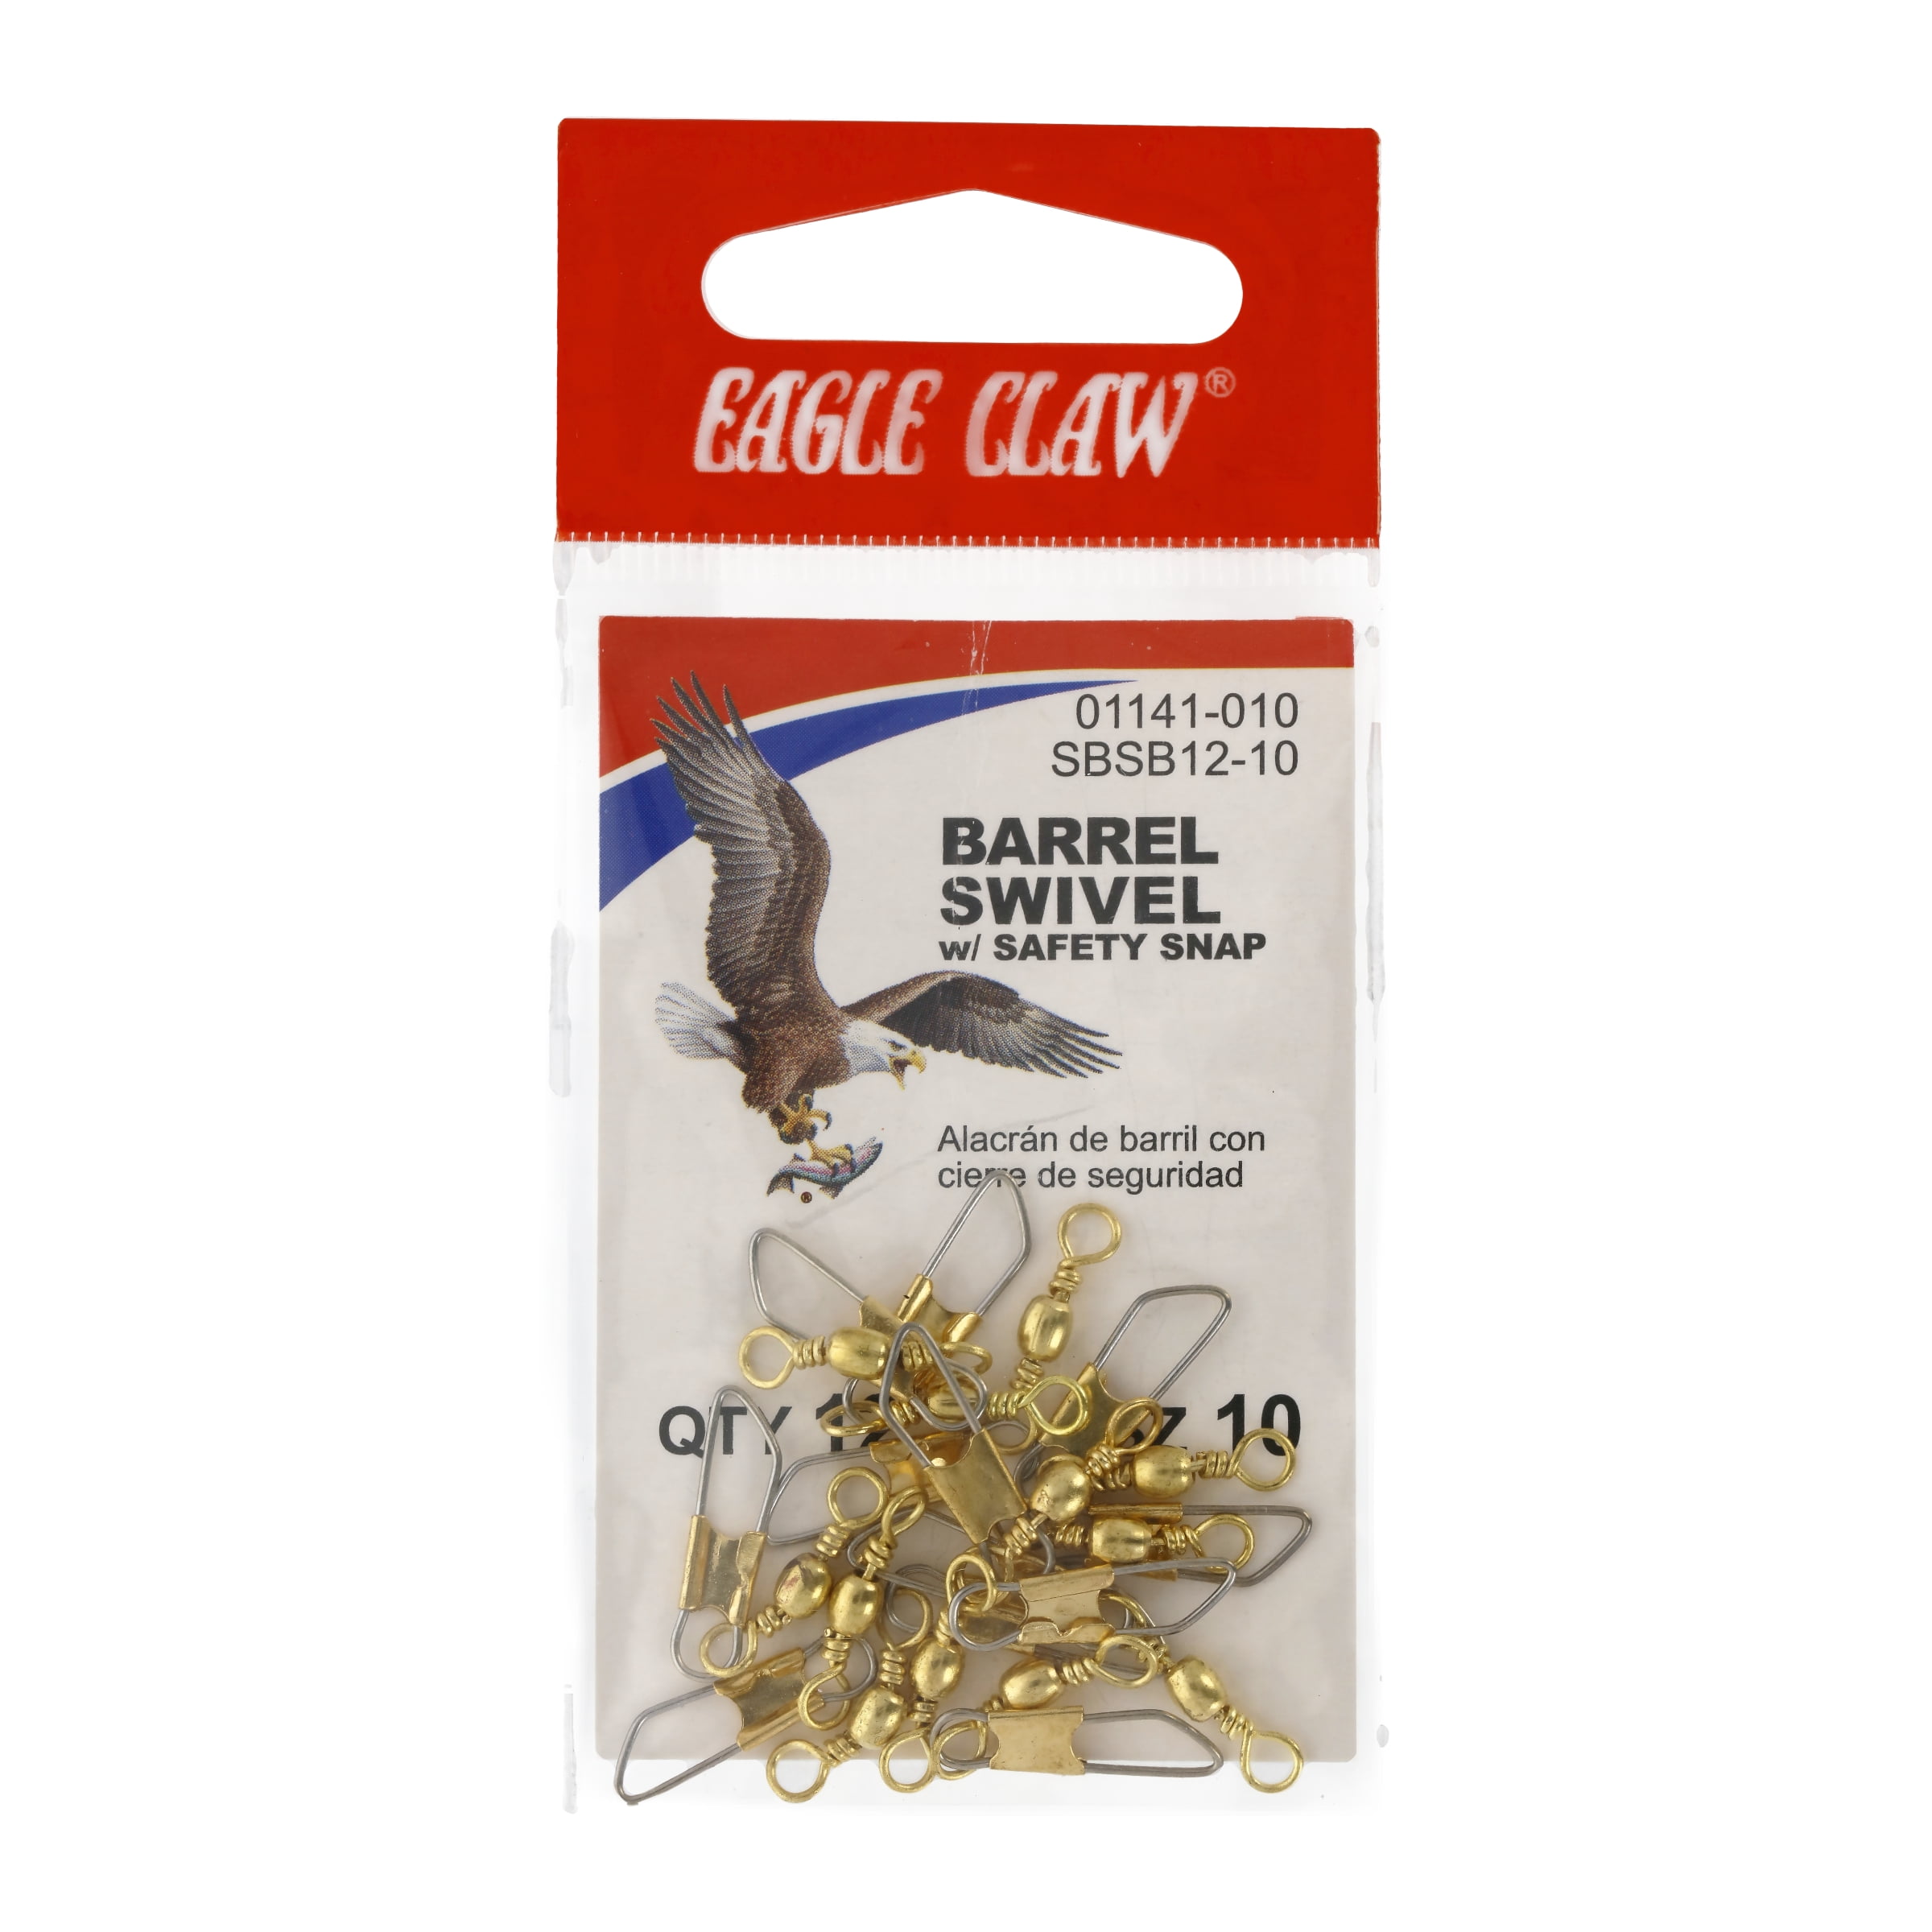 NEW/sealed Eagle Claw size 10 Brass Barrel Swivel w/ Snap 12 pieces 01141-010 